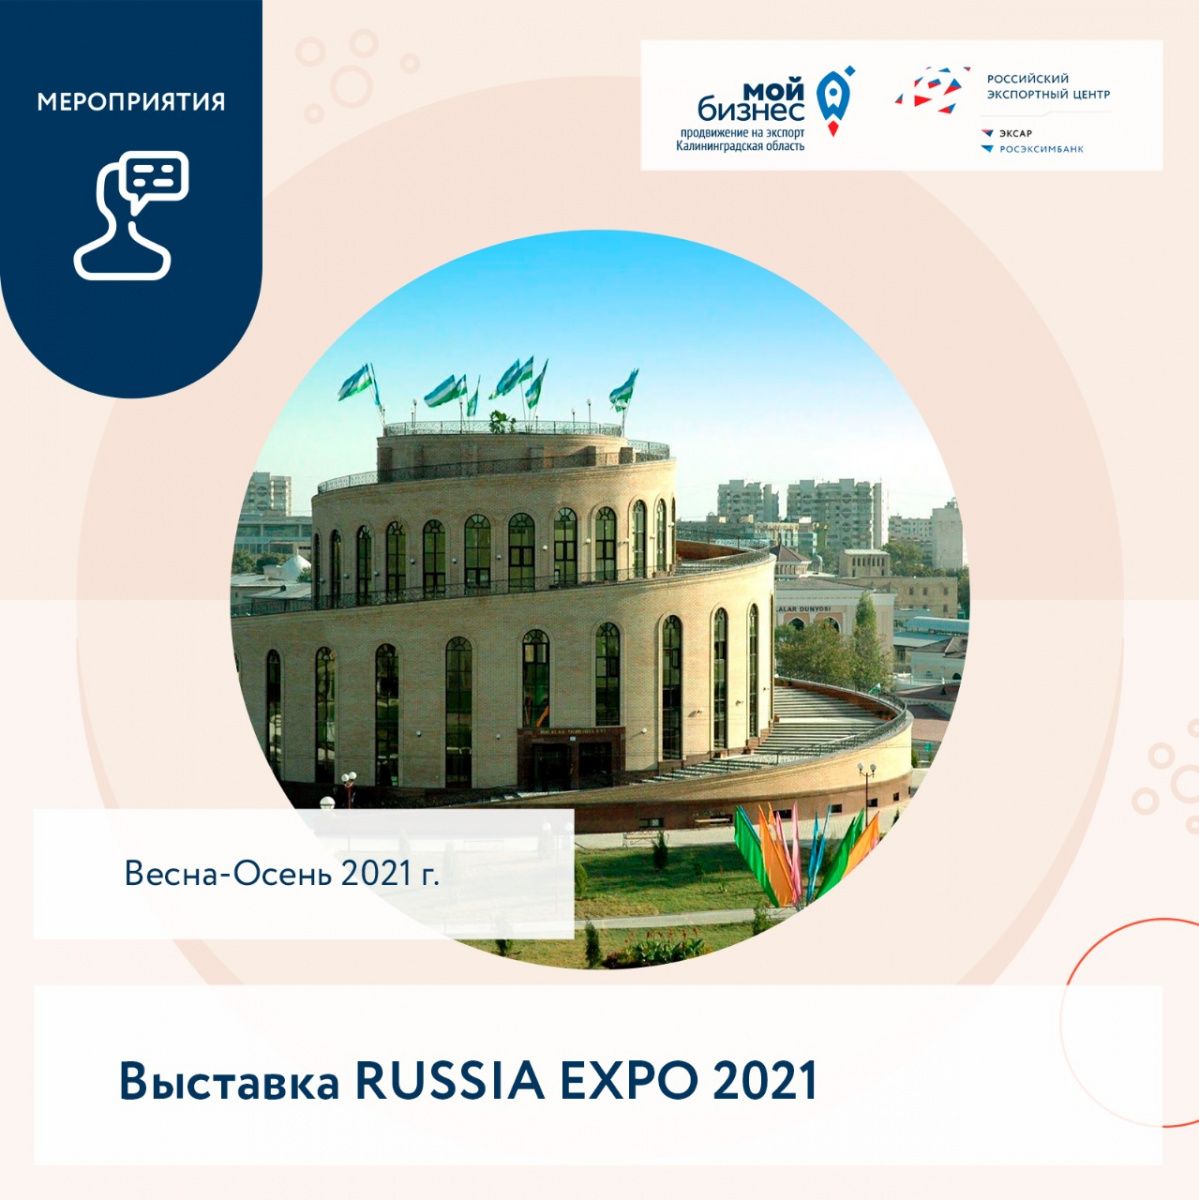 RUSSIA EXPO 2021